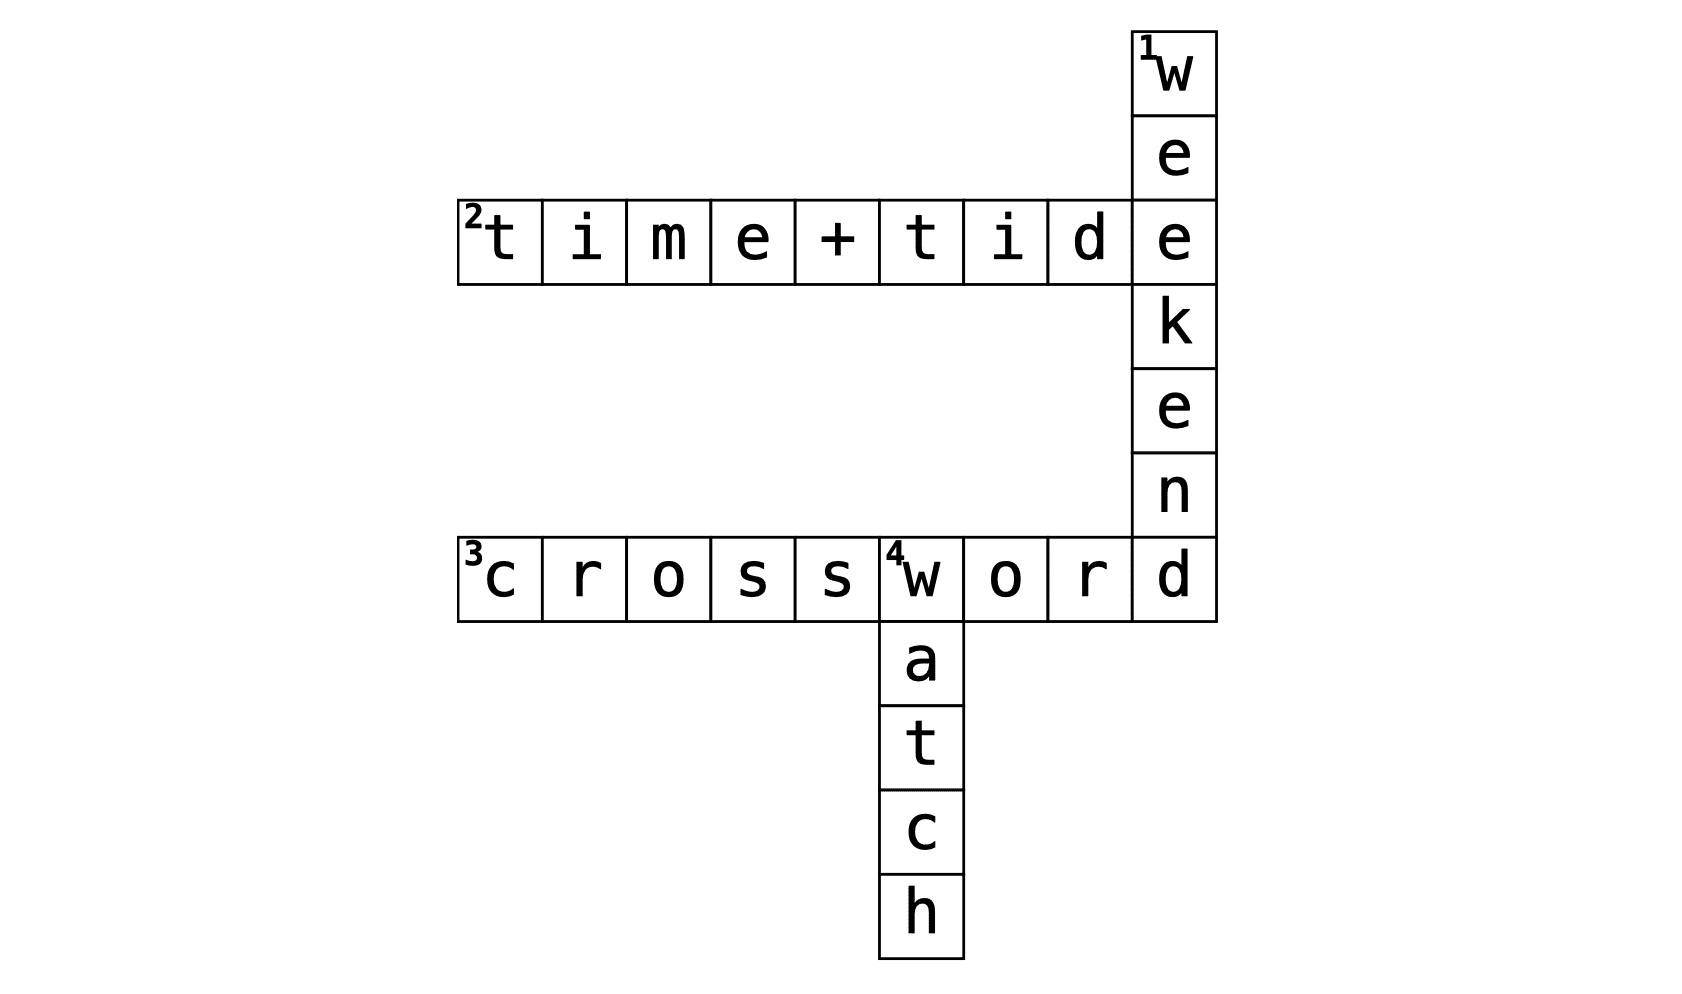 Time+Tide Weekend Watch Crossword: #9 “German Watch Manufactures”